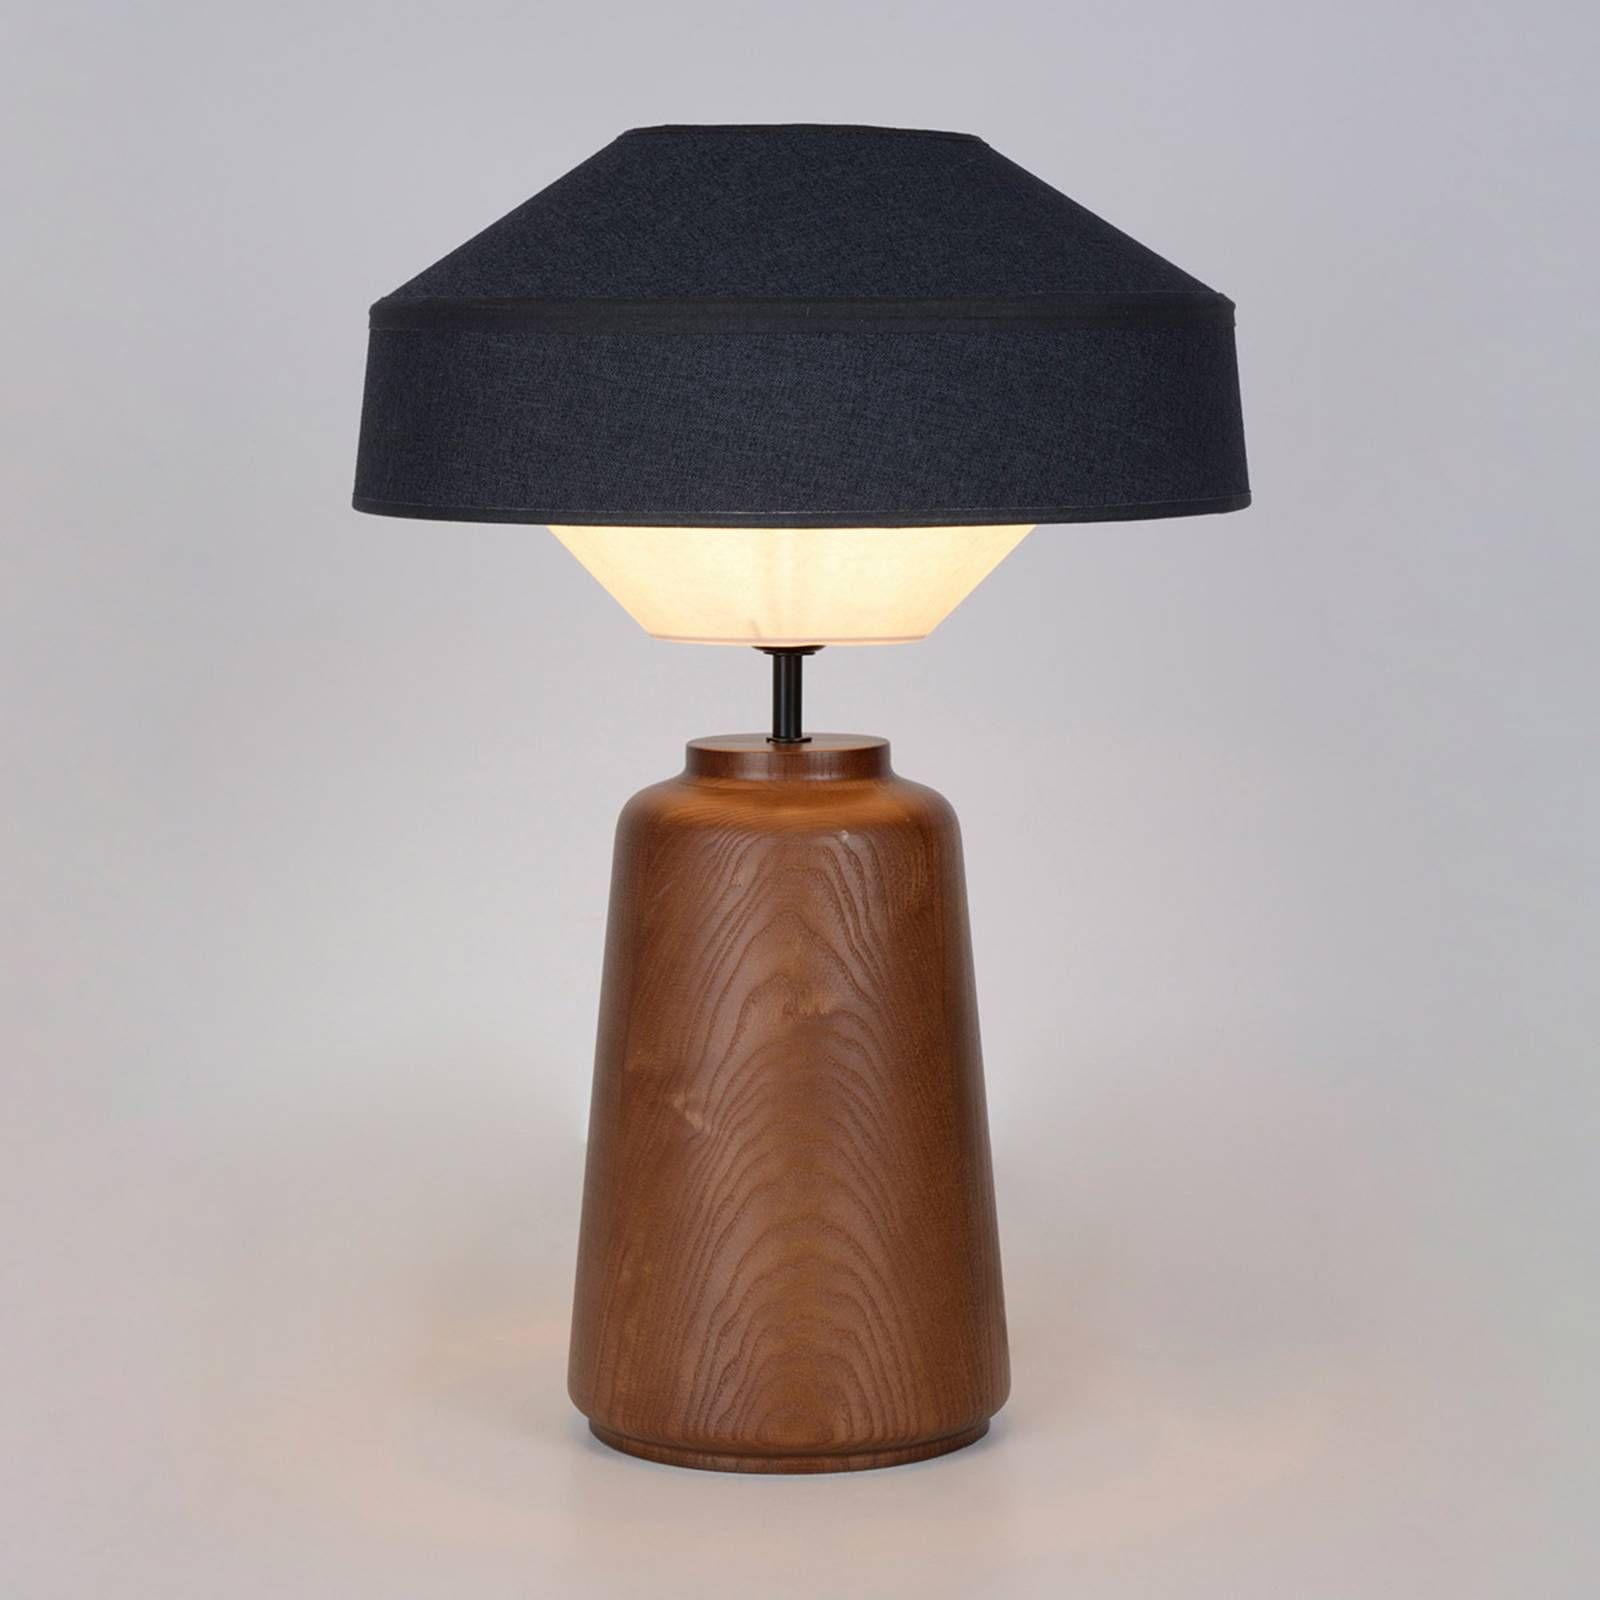 MARKET SET Mokuzai stolová lampa suna, výška 55 cm, Obývacia izba / jedáleň, drevo, žakárová látka, papier murano, E27, 60W, K: 55cm